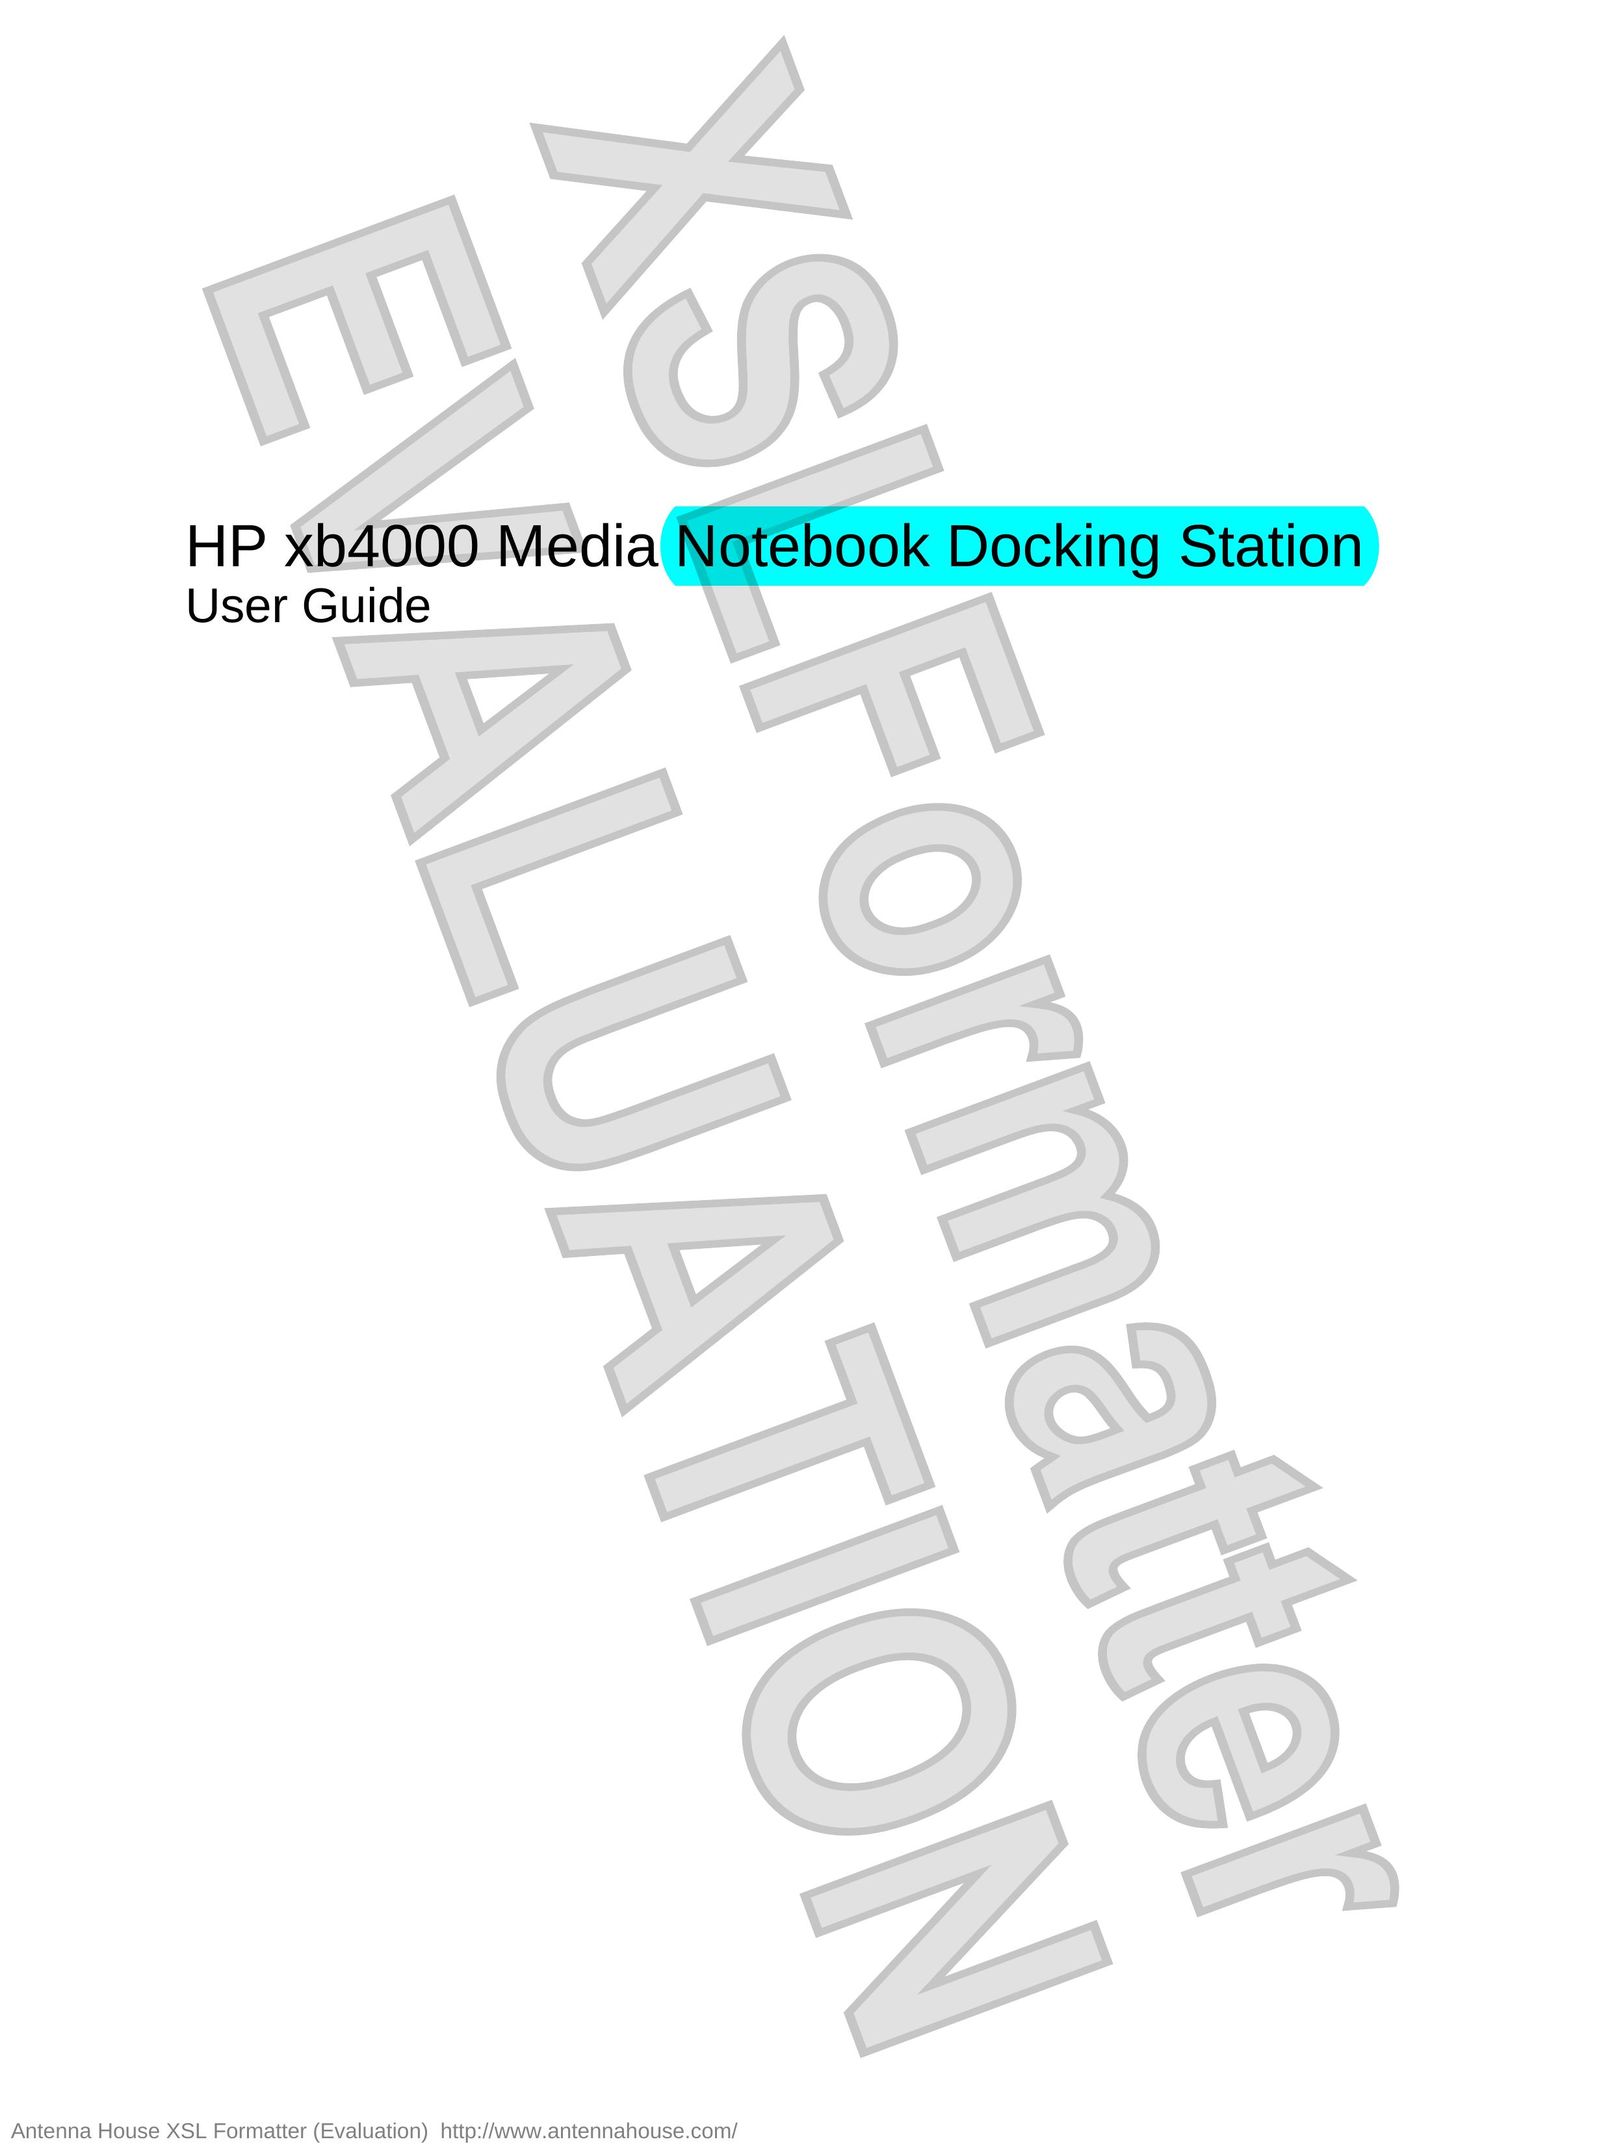 HP (Hewlett-Packard) XB4000 Laptop Docking Station User Manual